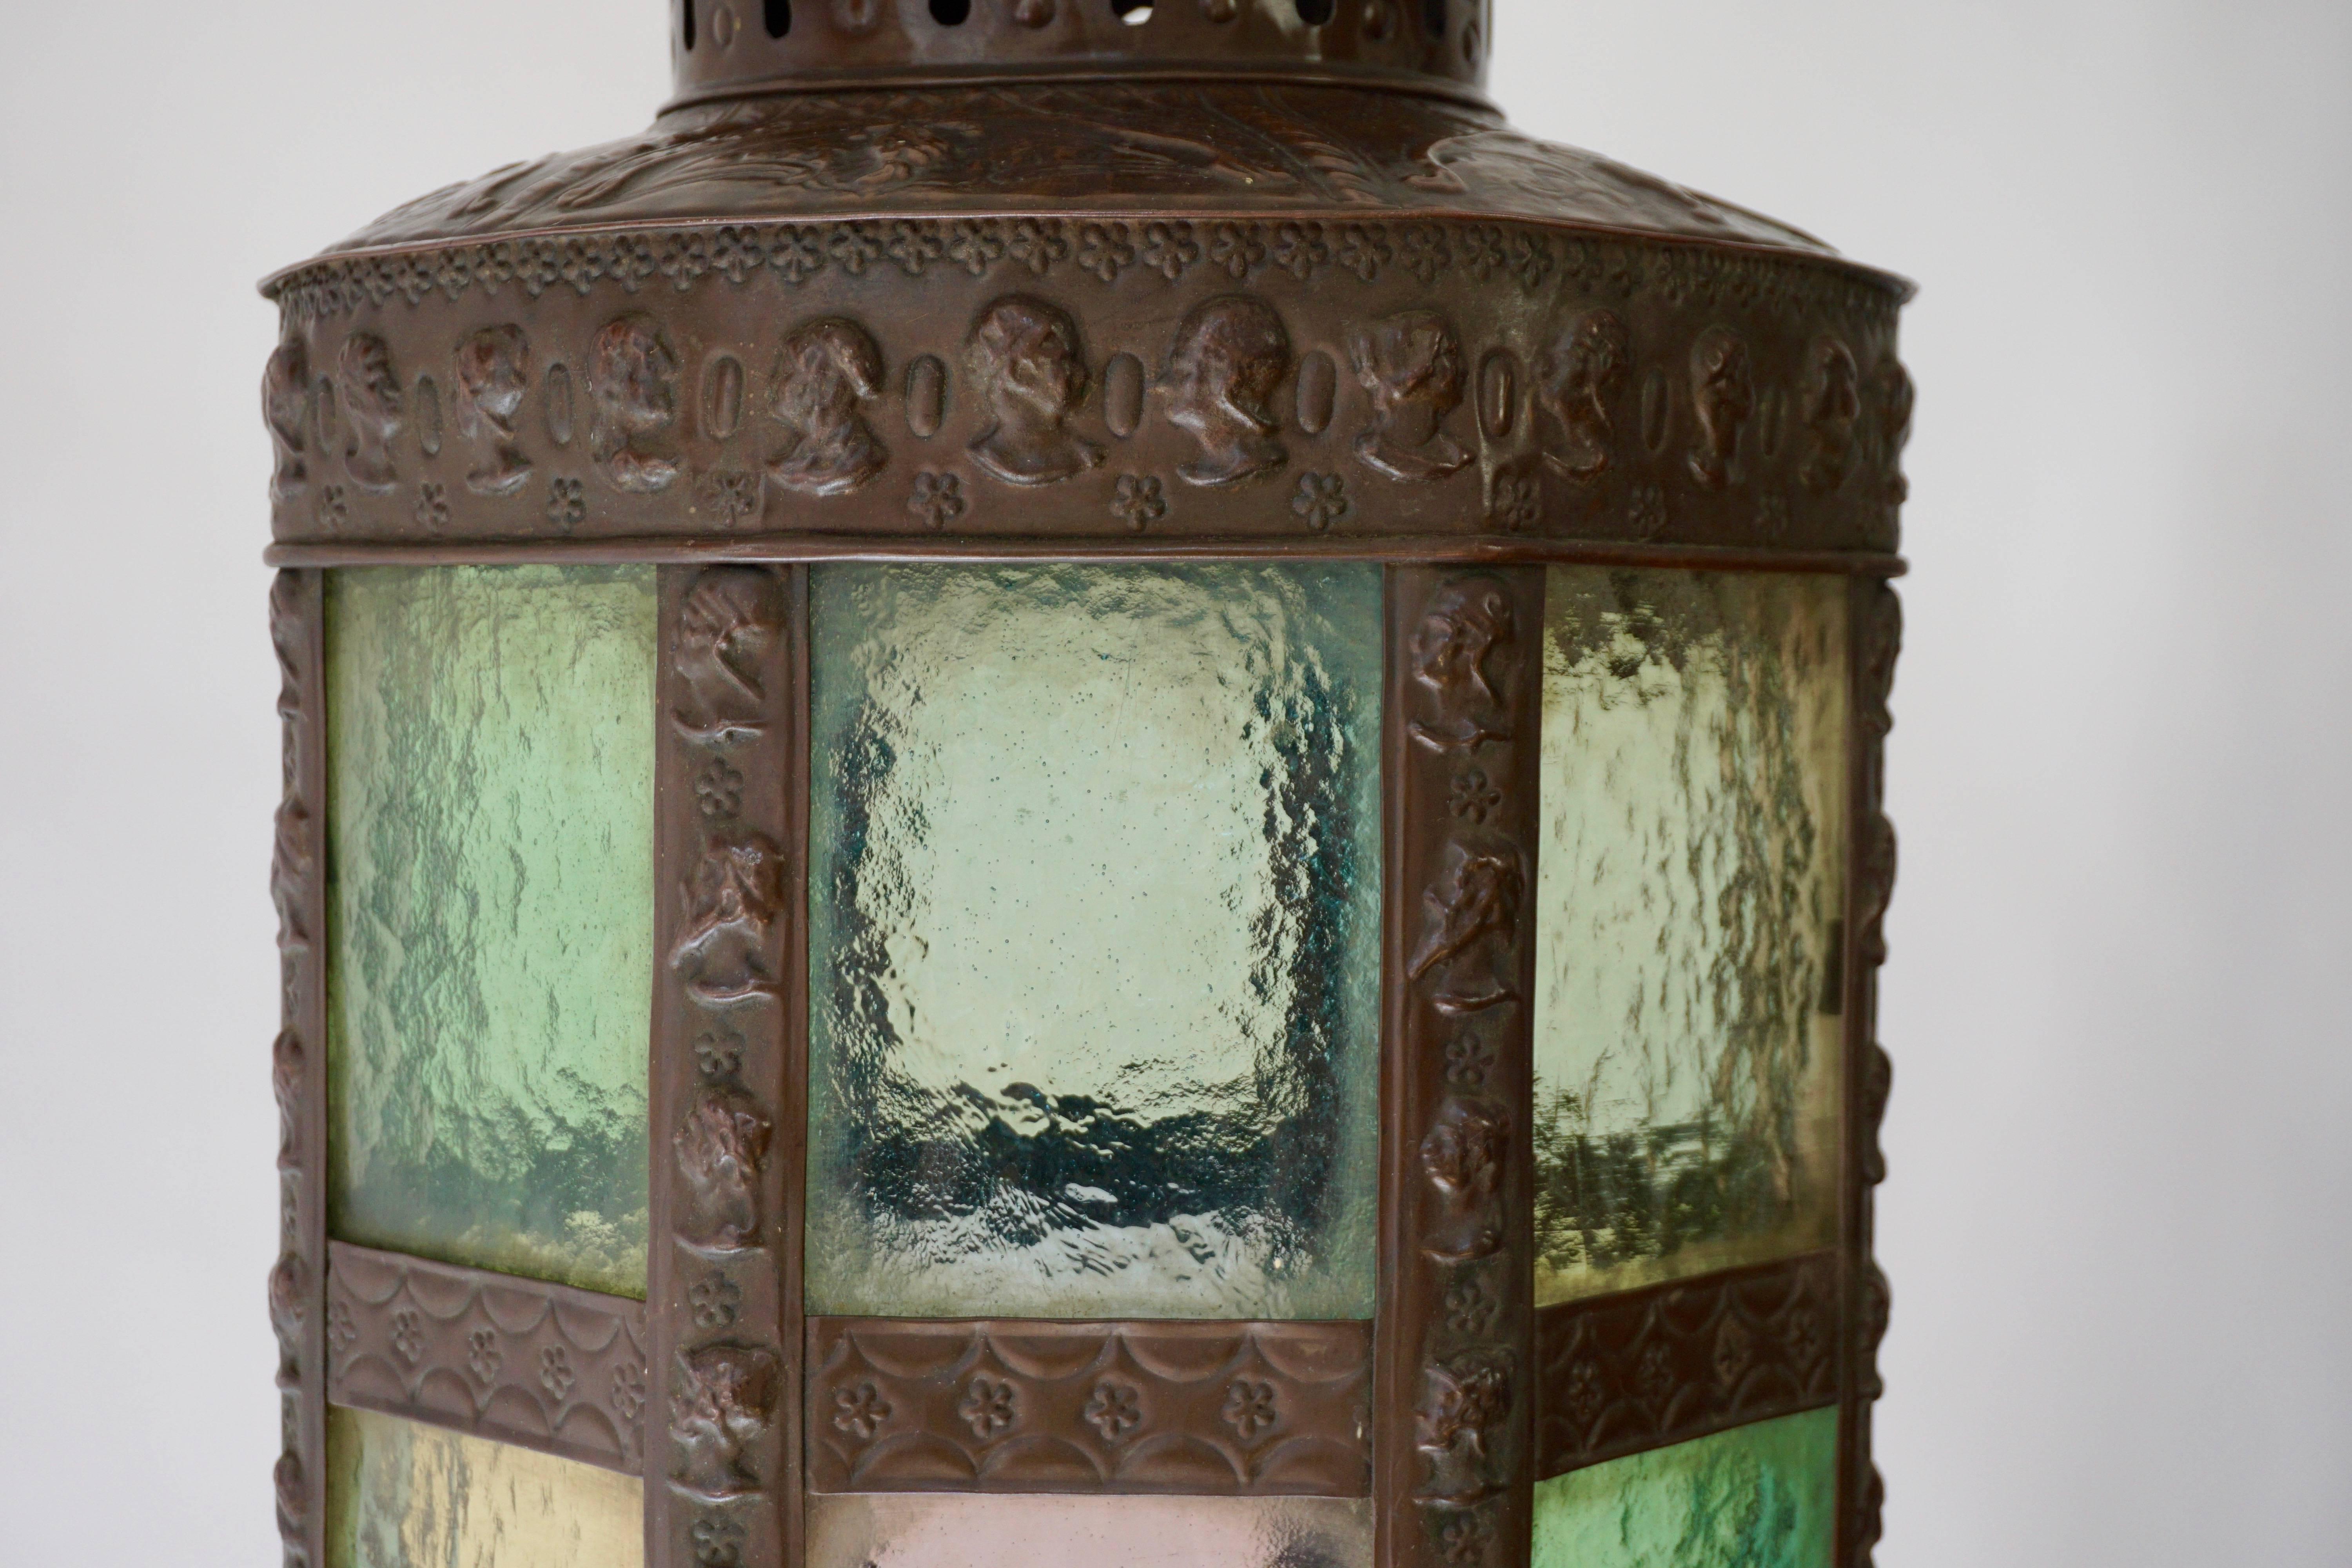  Copper Lantern - 18th Century 3